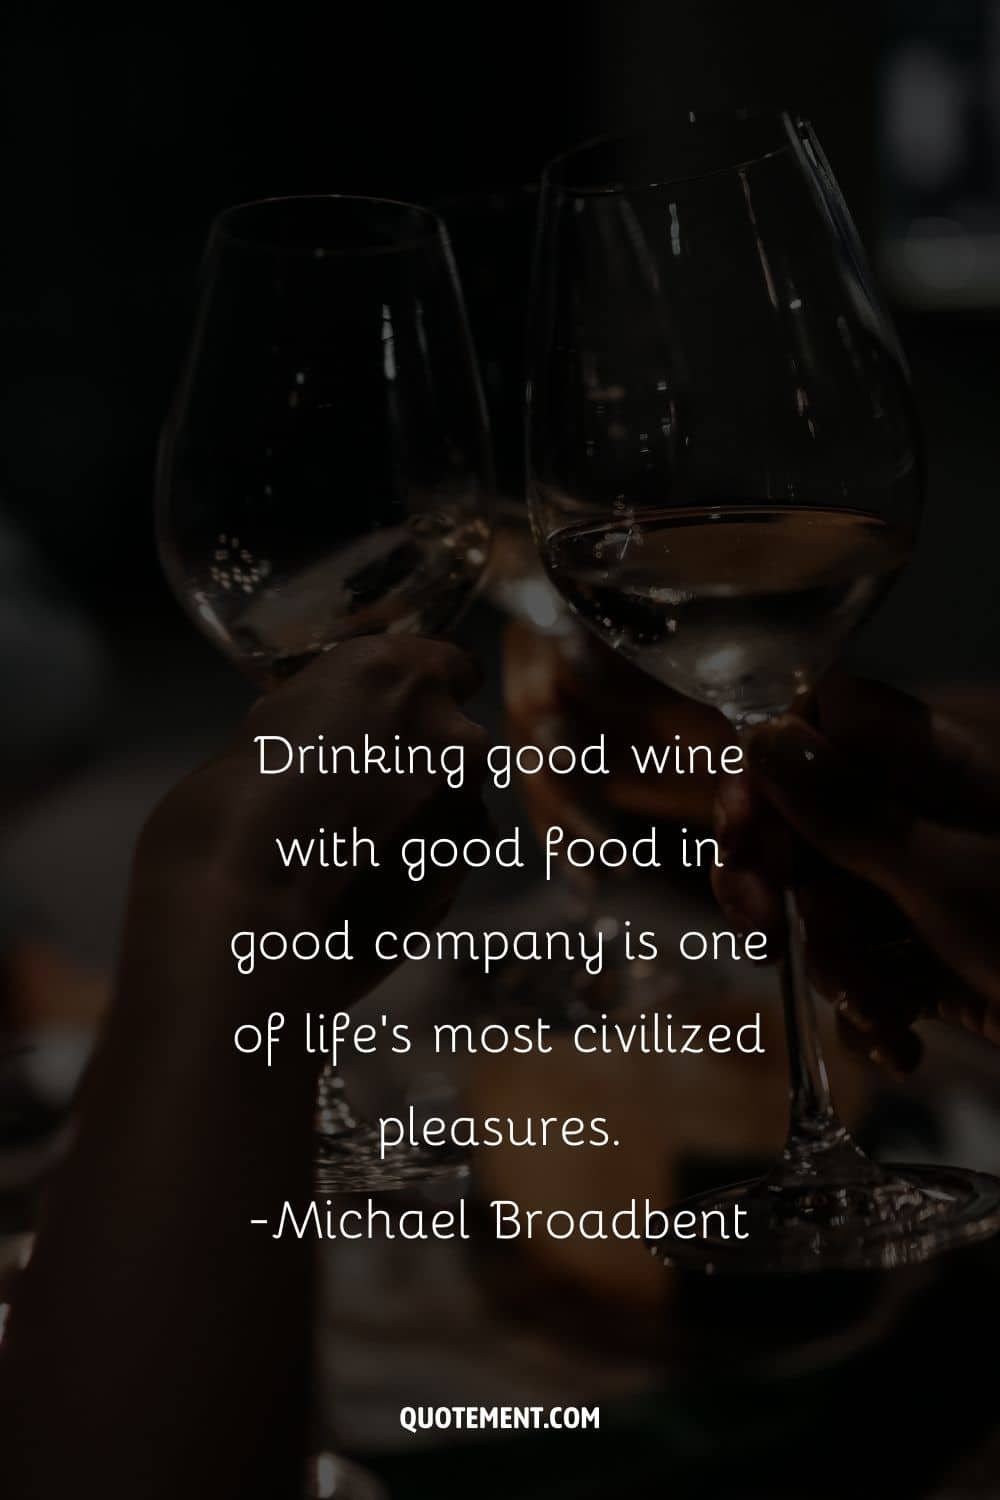 cheering glasses image representing classy wine quote